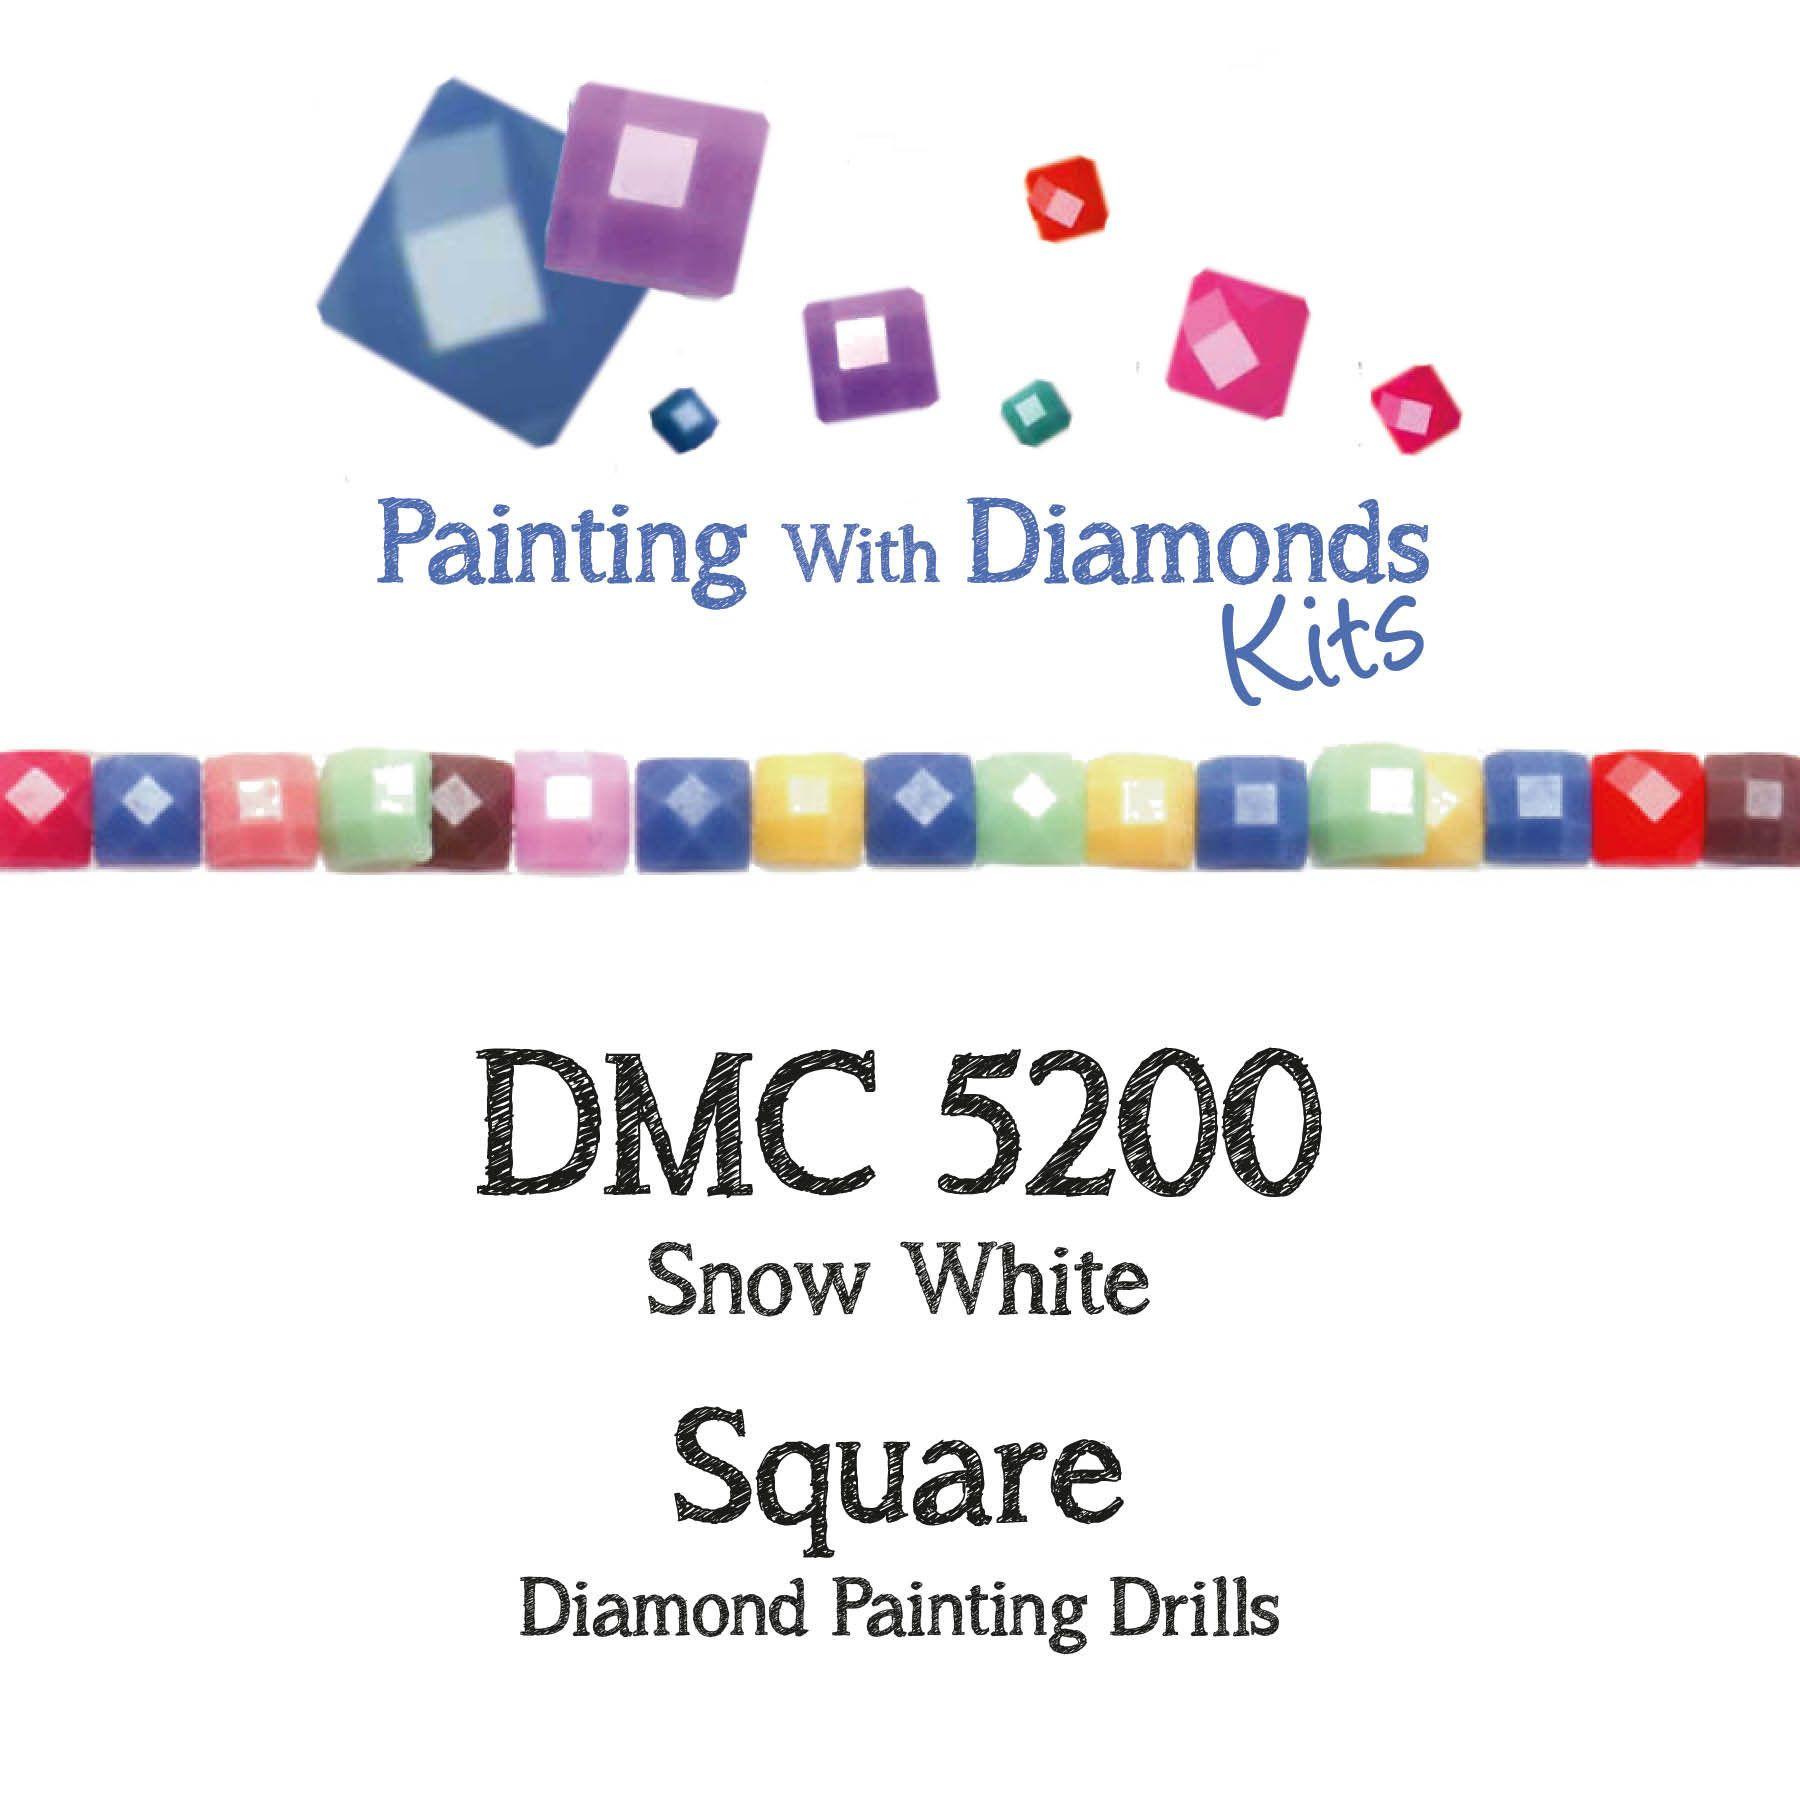 Read White Square Logo - Pieces DMC 5200 SQUARE 5D Diamond Painting Drills Dmc 5200